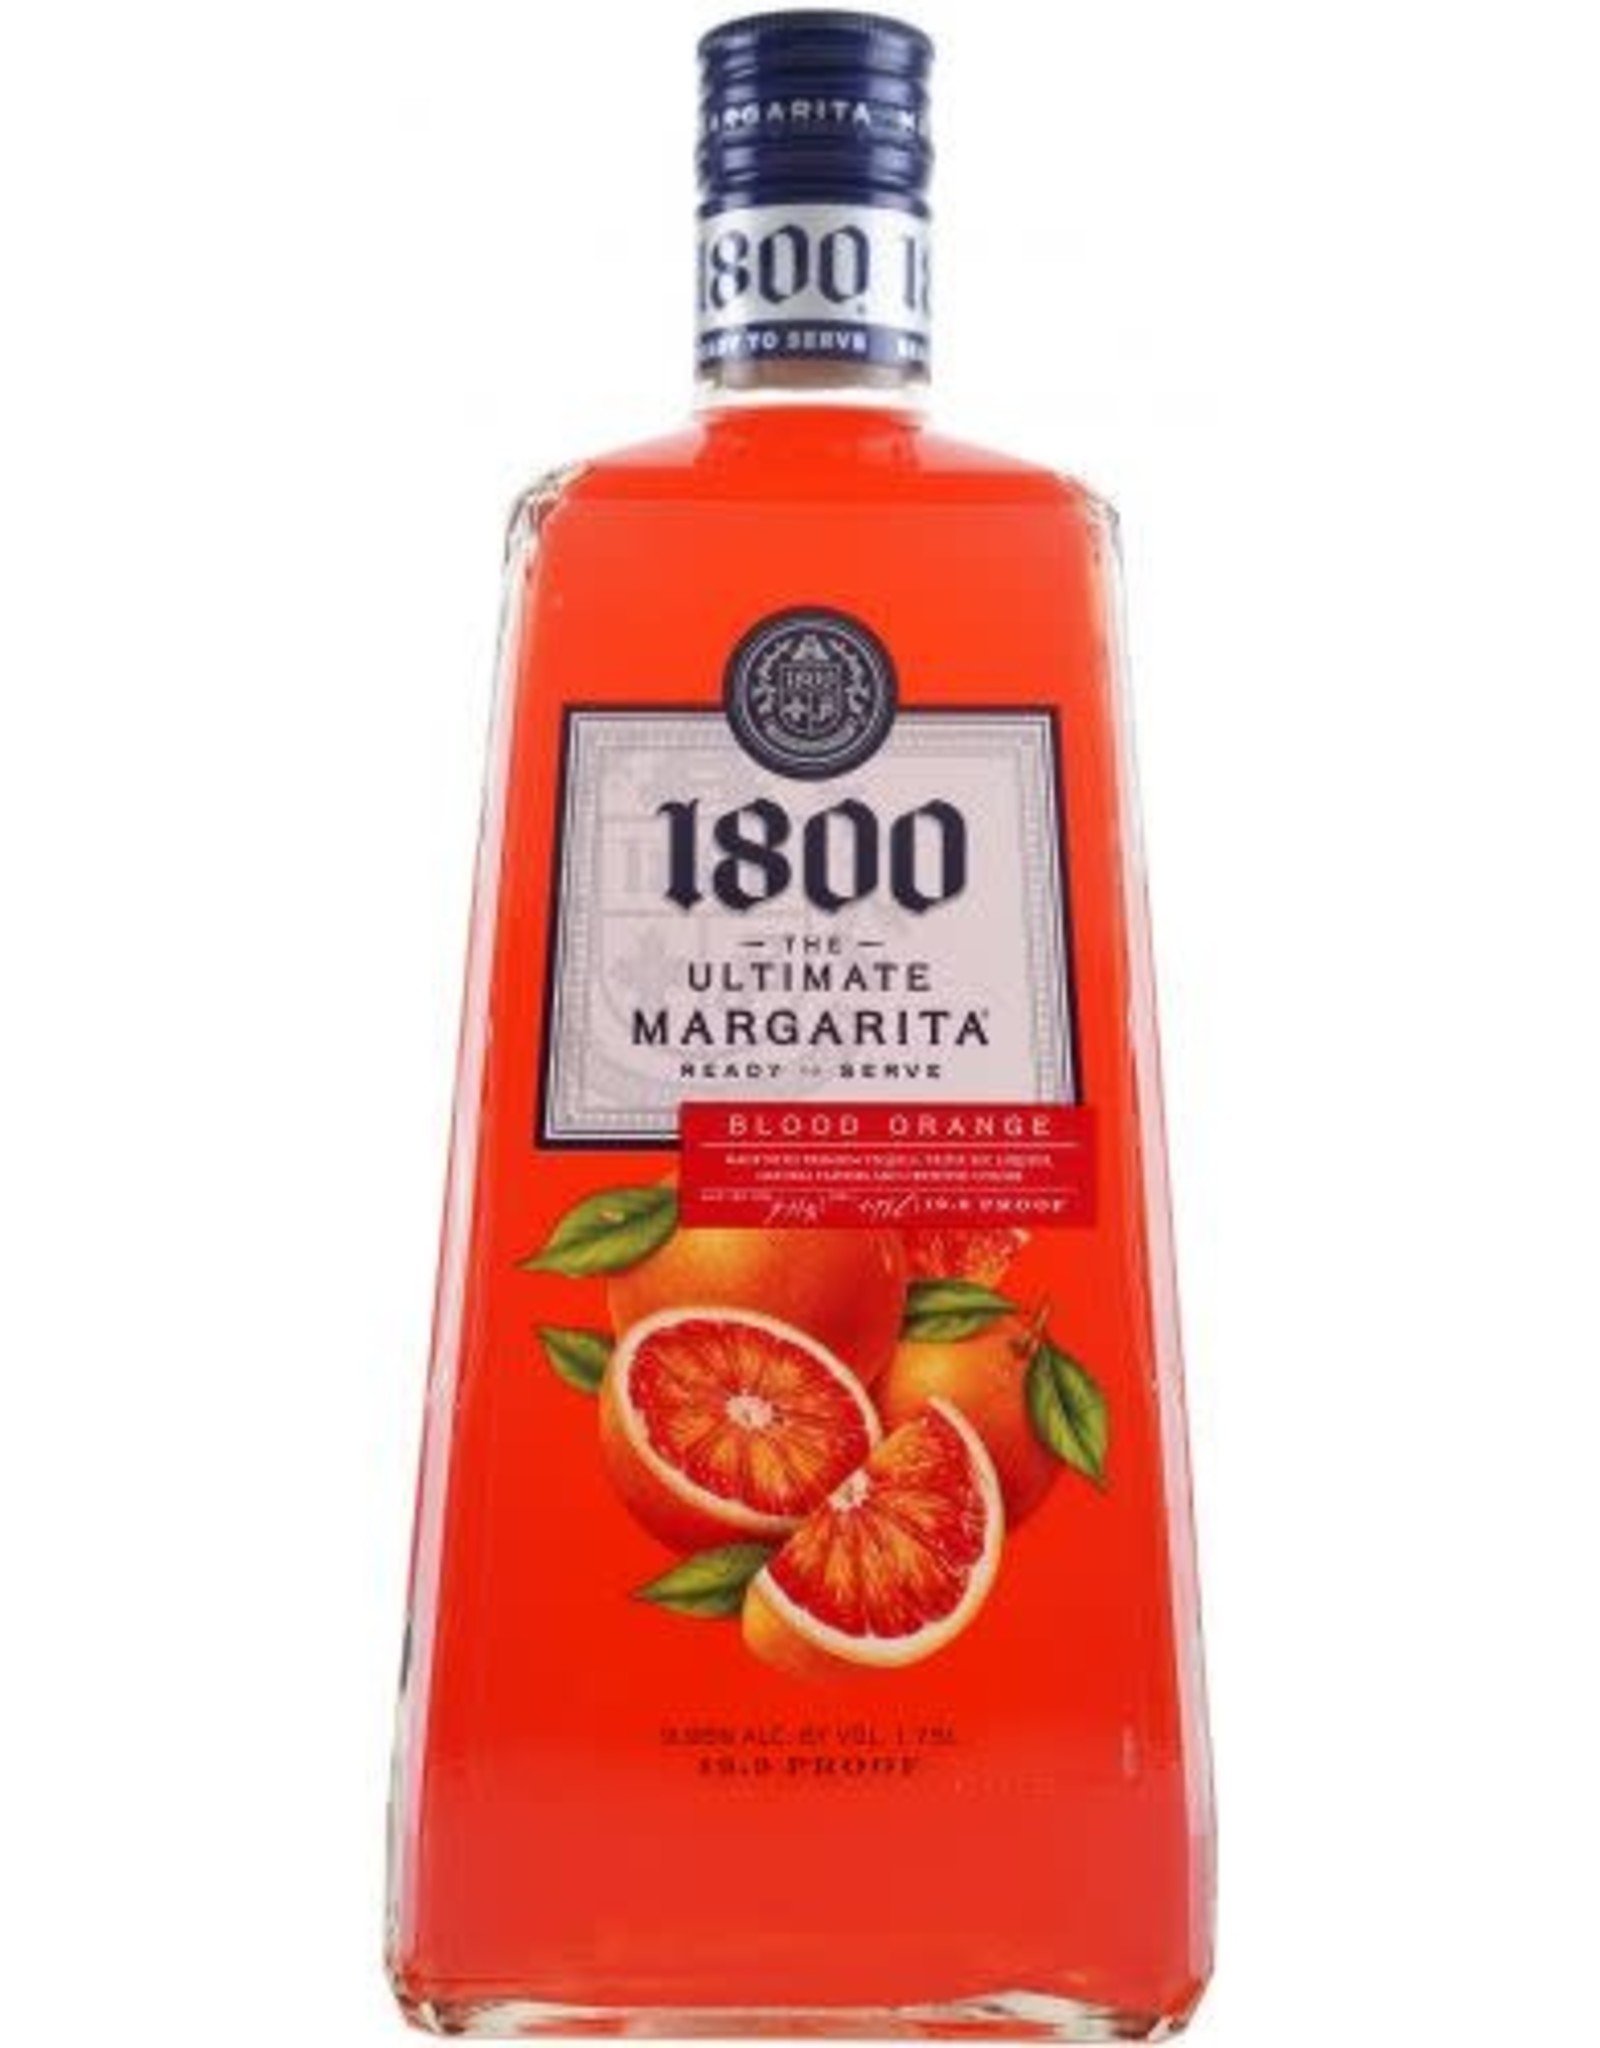 1800 margarita mix watermelon